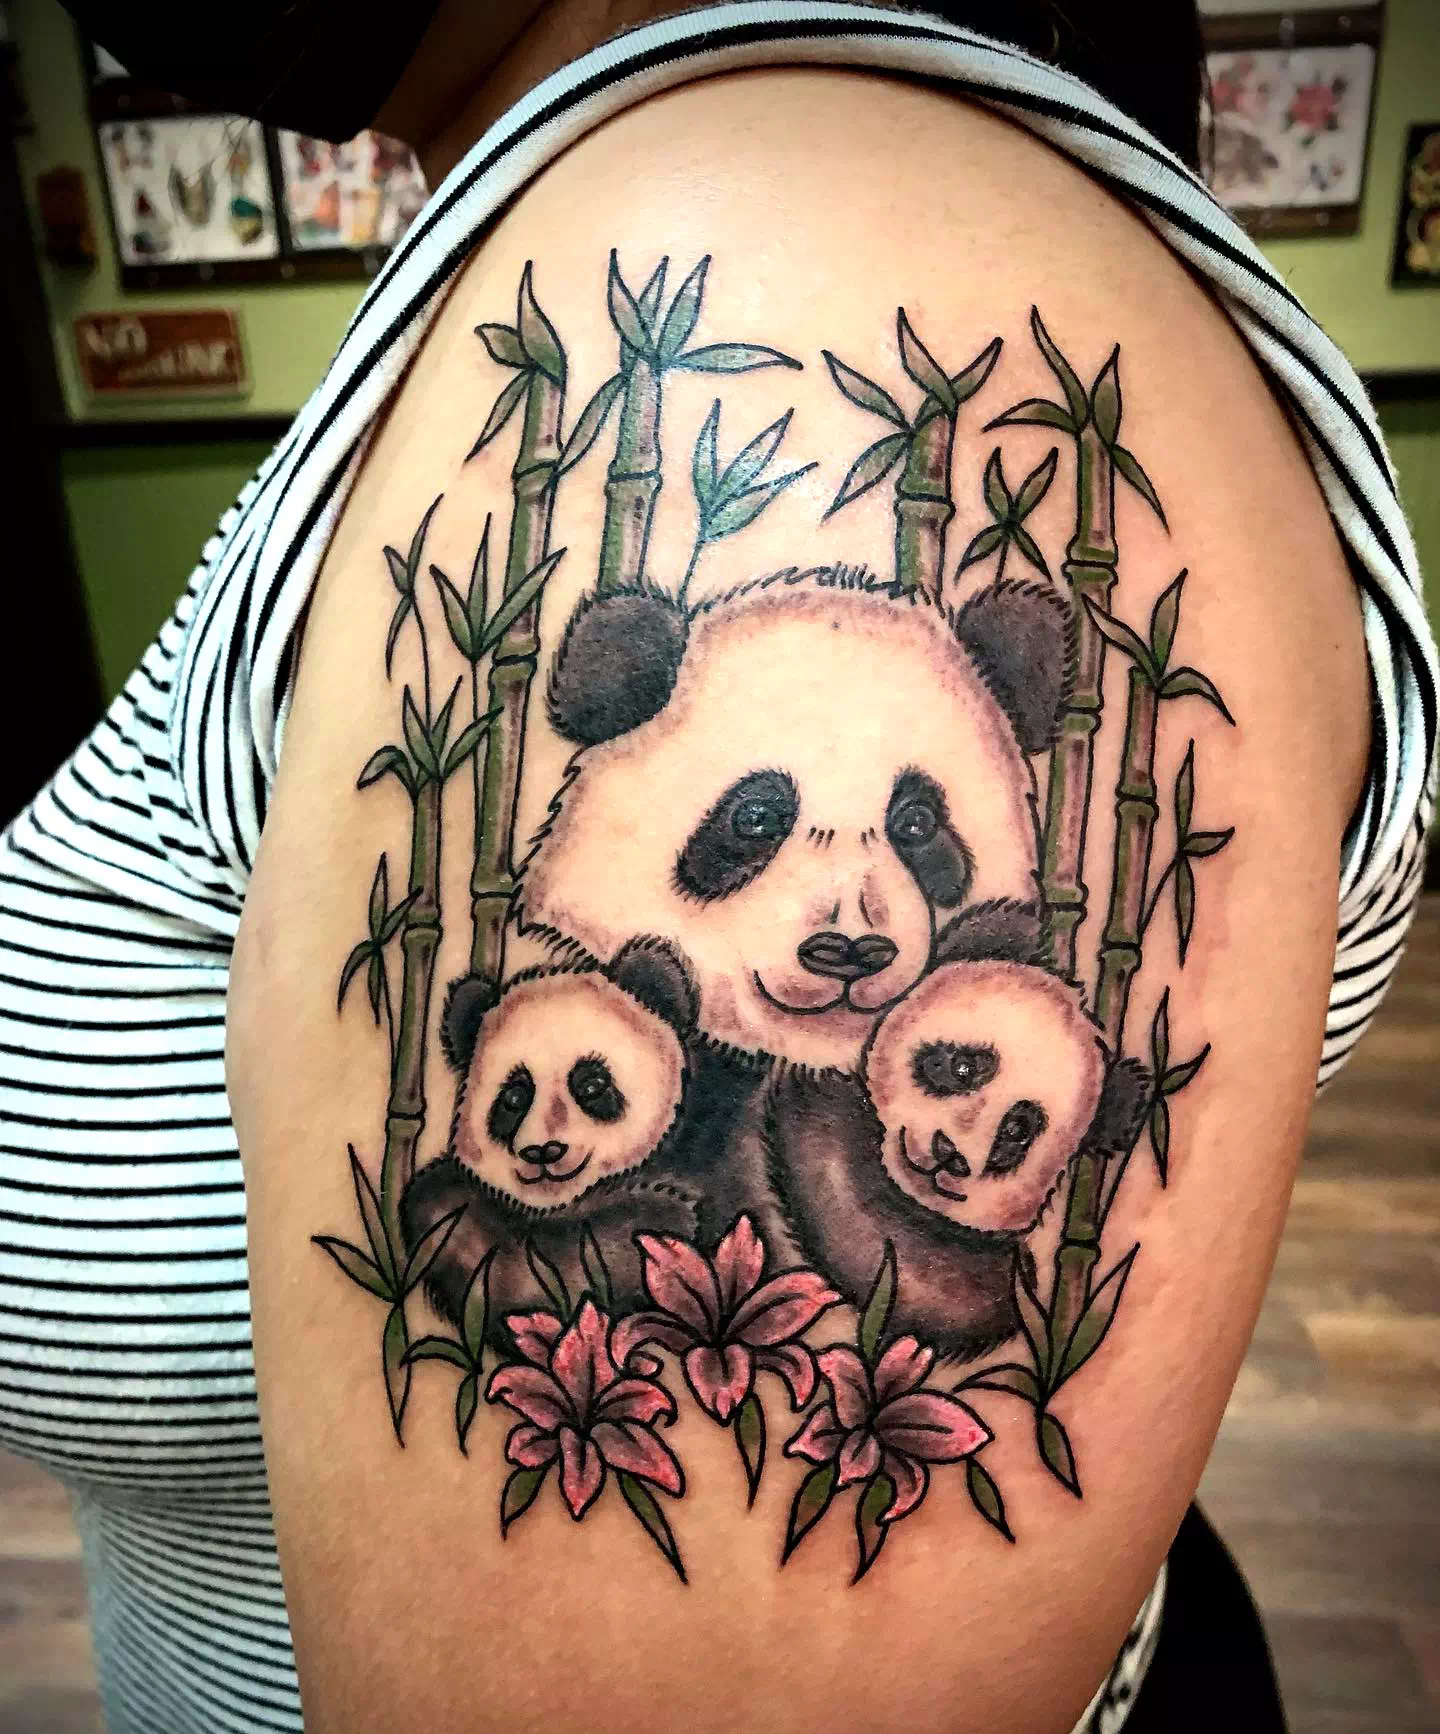 Panda Tattoo Ideas Family Inspired Shoulder Tattoo